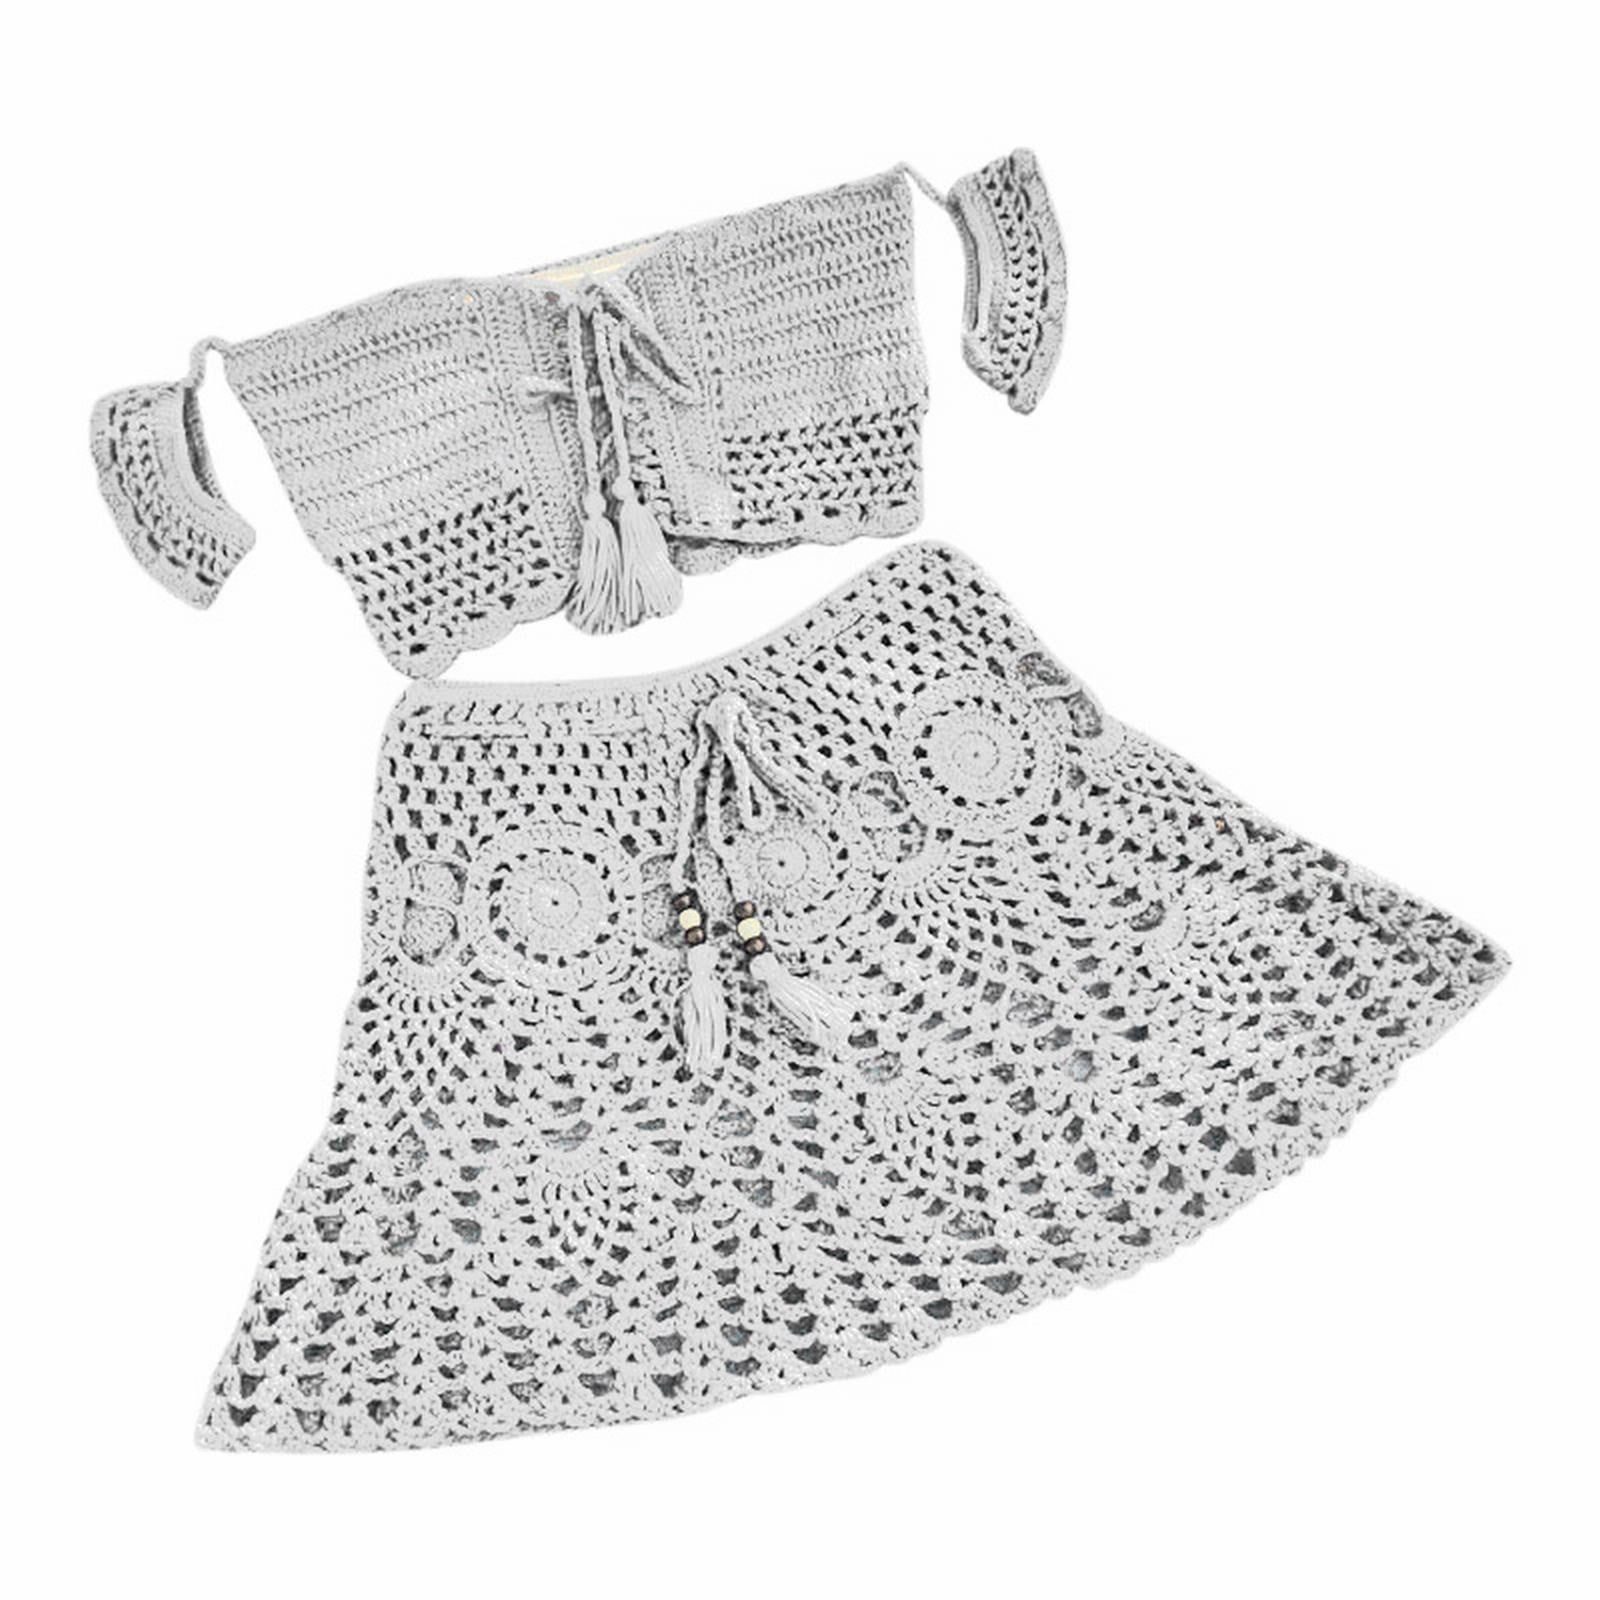 Baycosin Micro Bikini Women's Solid Color Hand Crochet Top Miniskirt ...